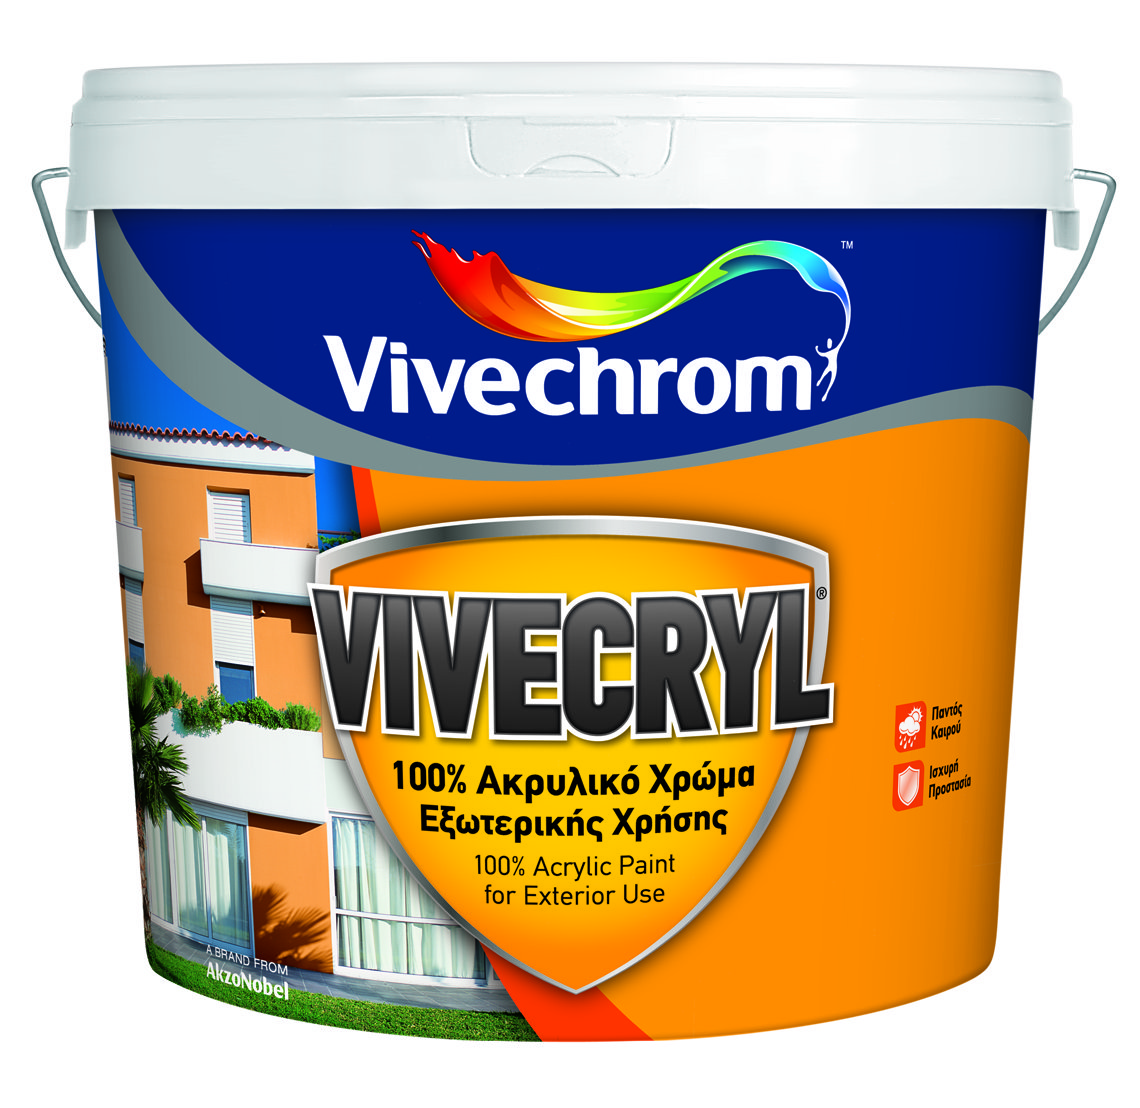 Vivechrom Vivecryl Ακρυλικό Οικολογικό Χρώμα Matt Finish Βάση P 3L